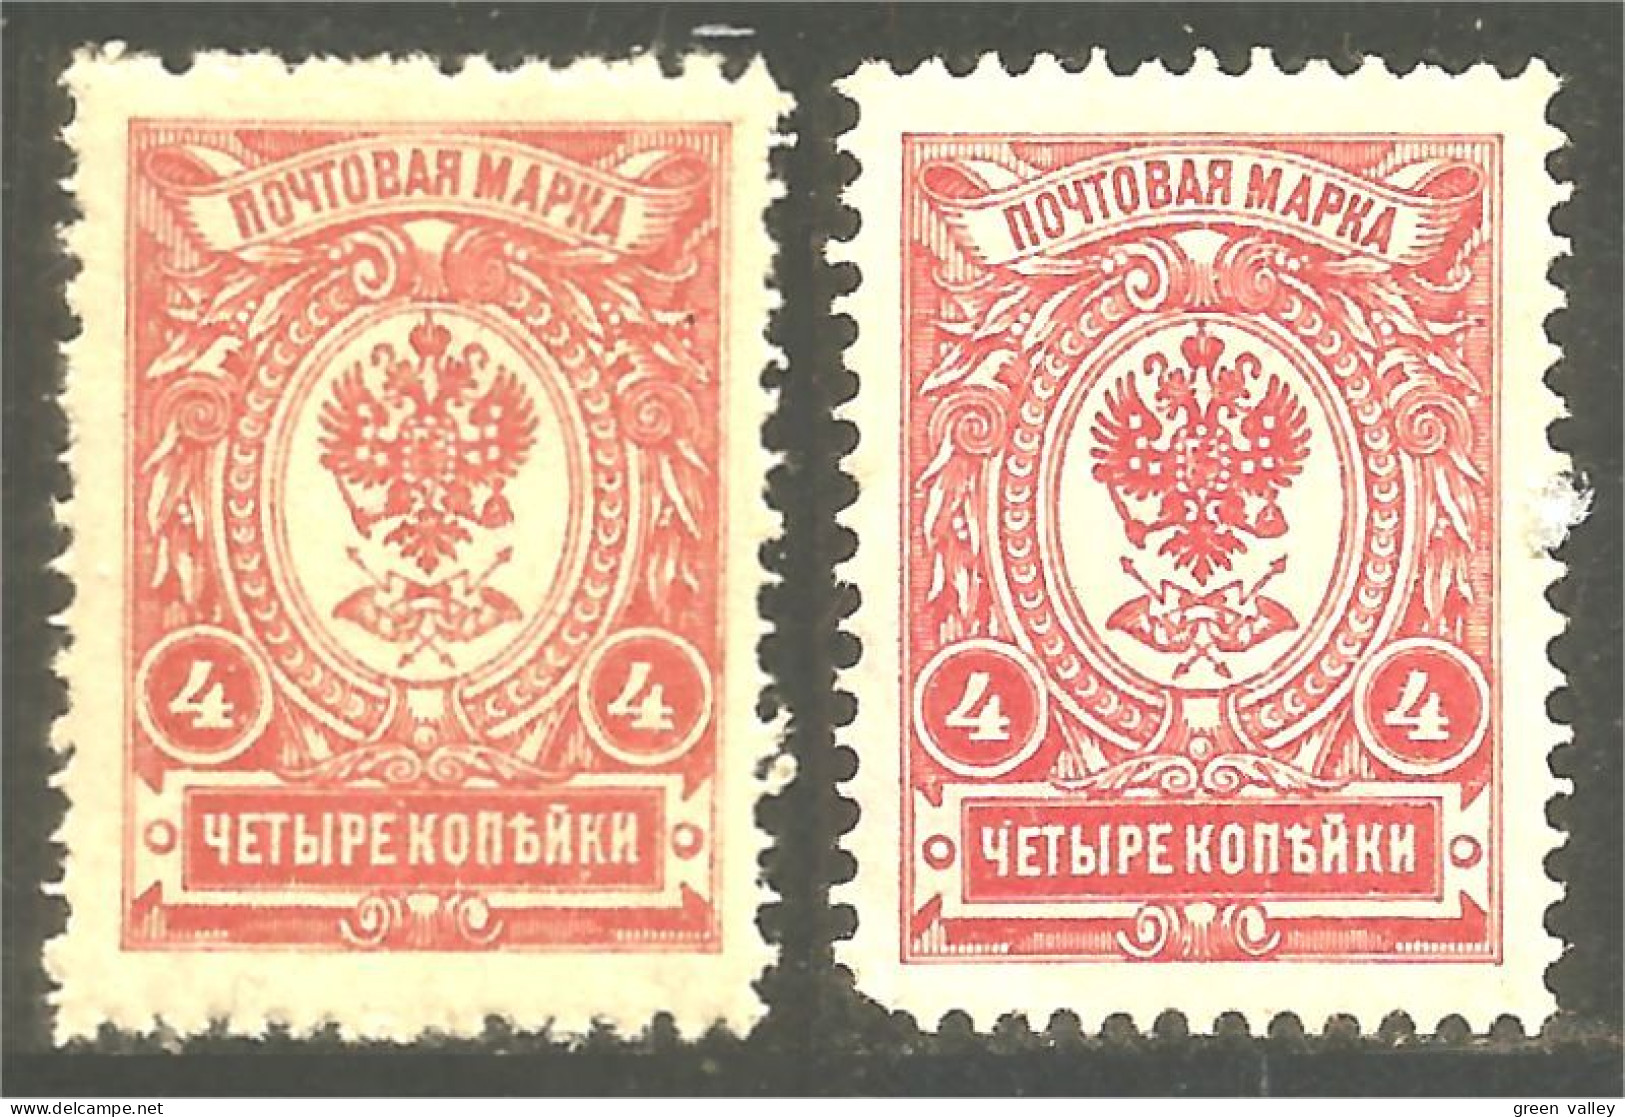 771 Russie 4k 1909 Carmine (mint) Carmine-rose (no Gum) Aigle Imperial Eagle Post Horn Cor Postal Varnish (RUZ-355) - Nuovi